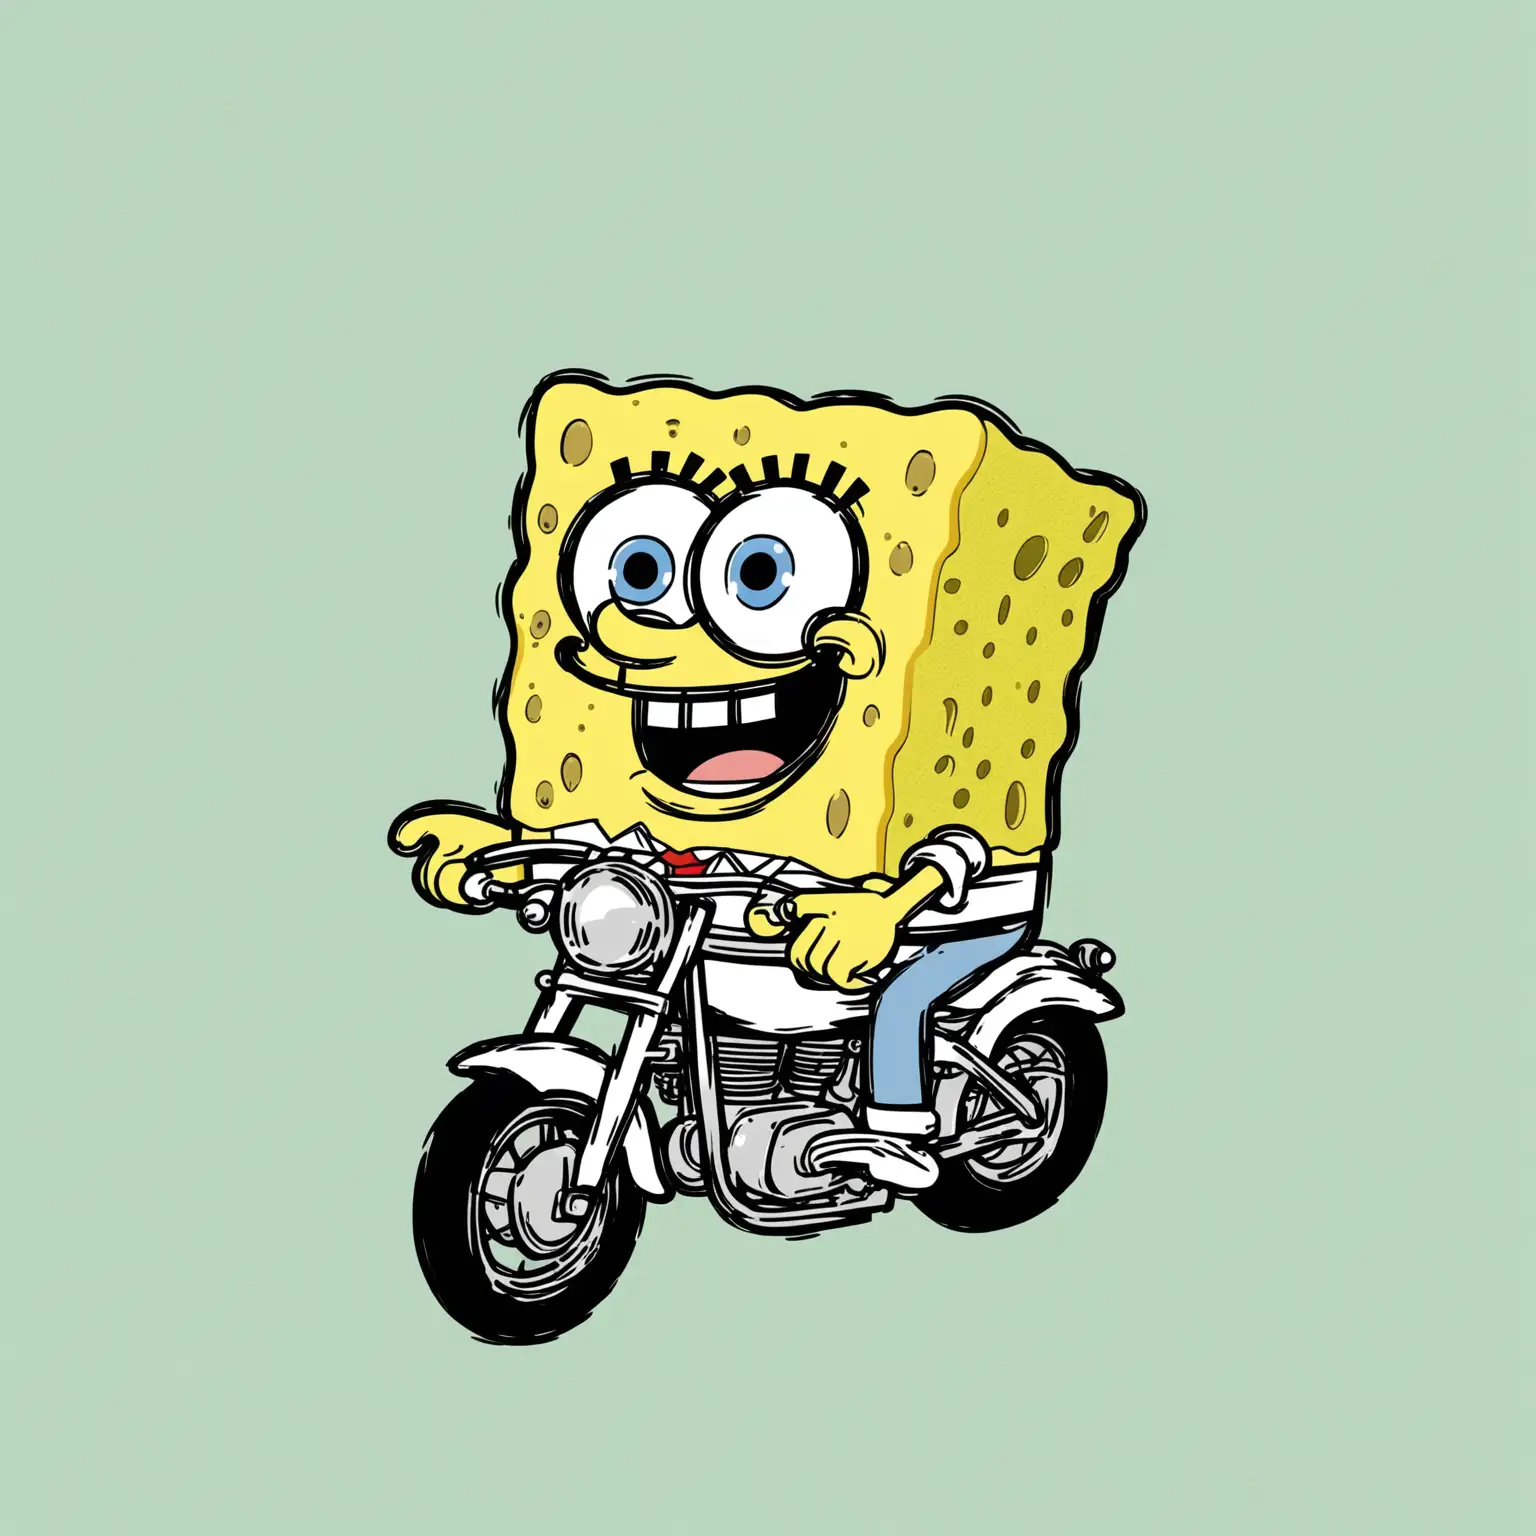 Minimalist style, sponge bob riding a motorcycle, hand-drawn cartoon style